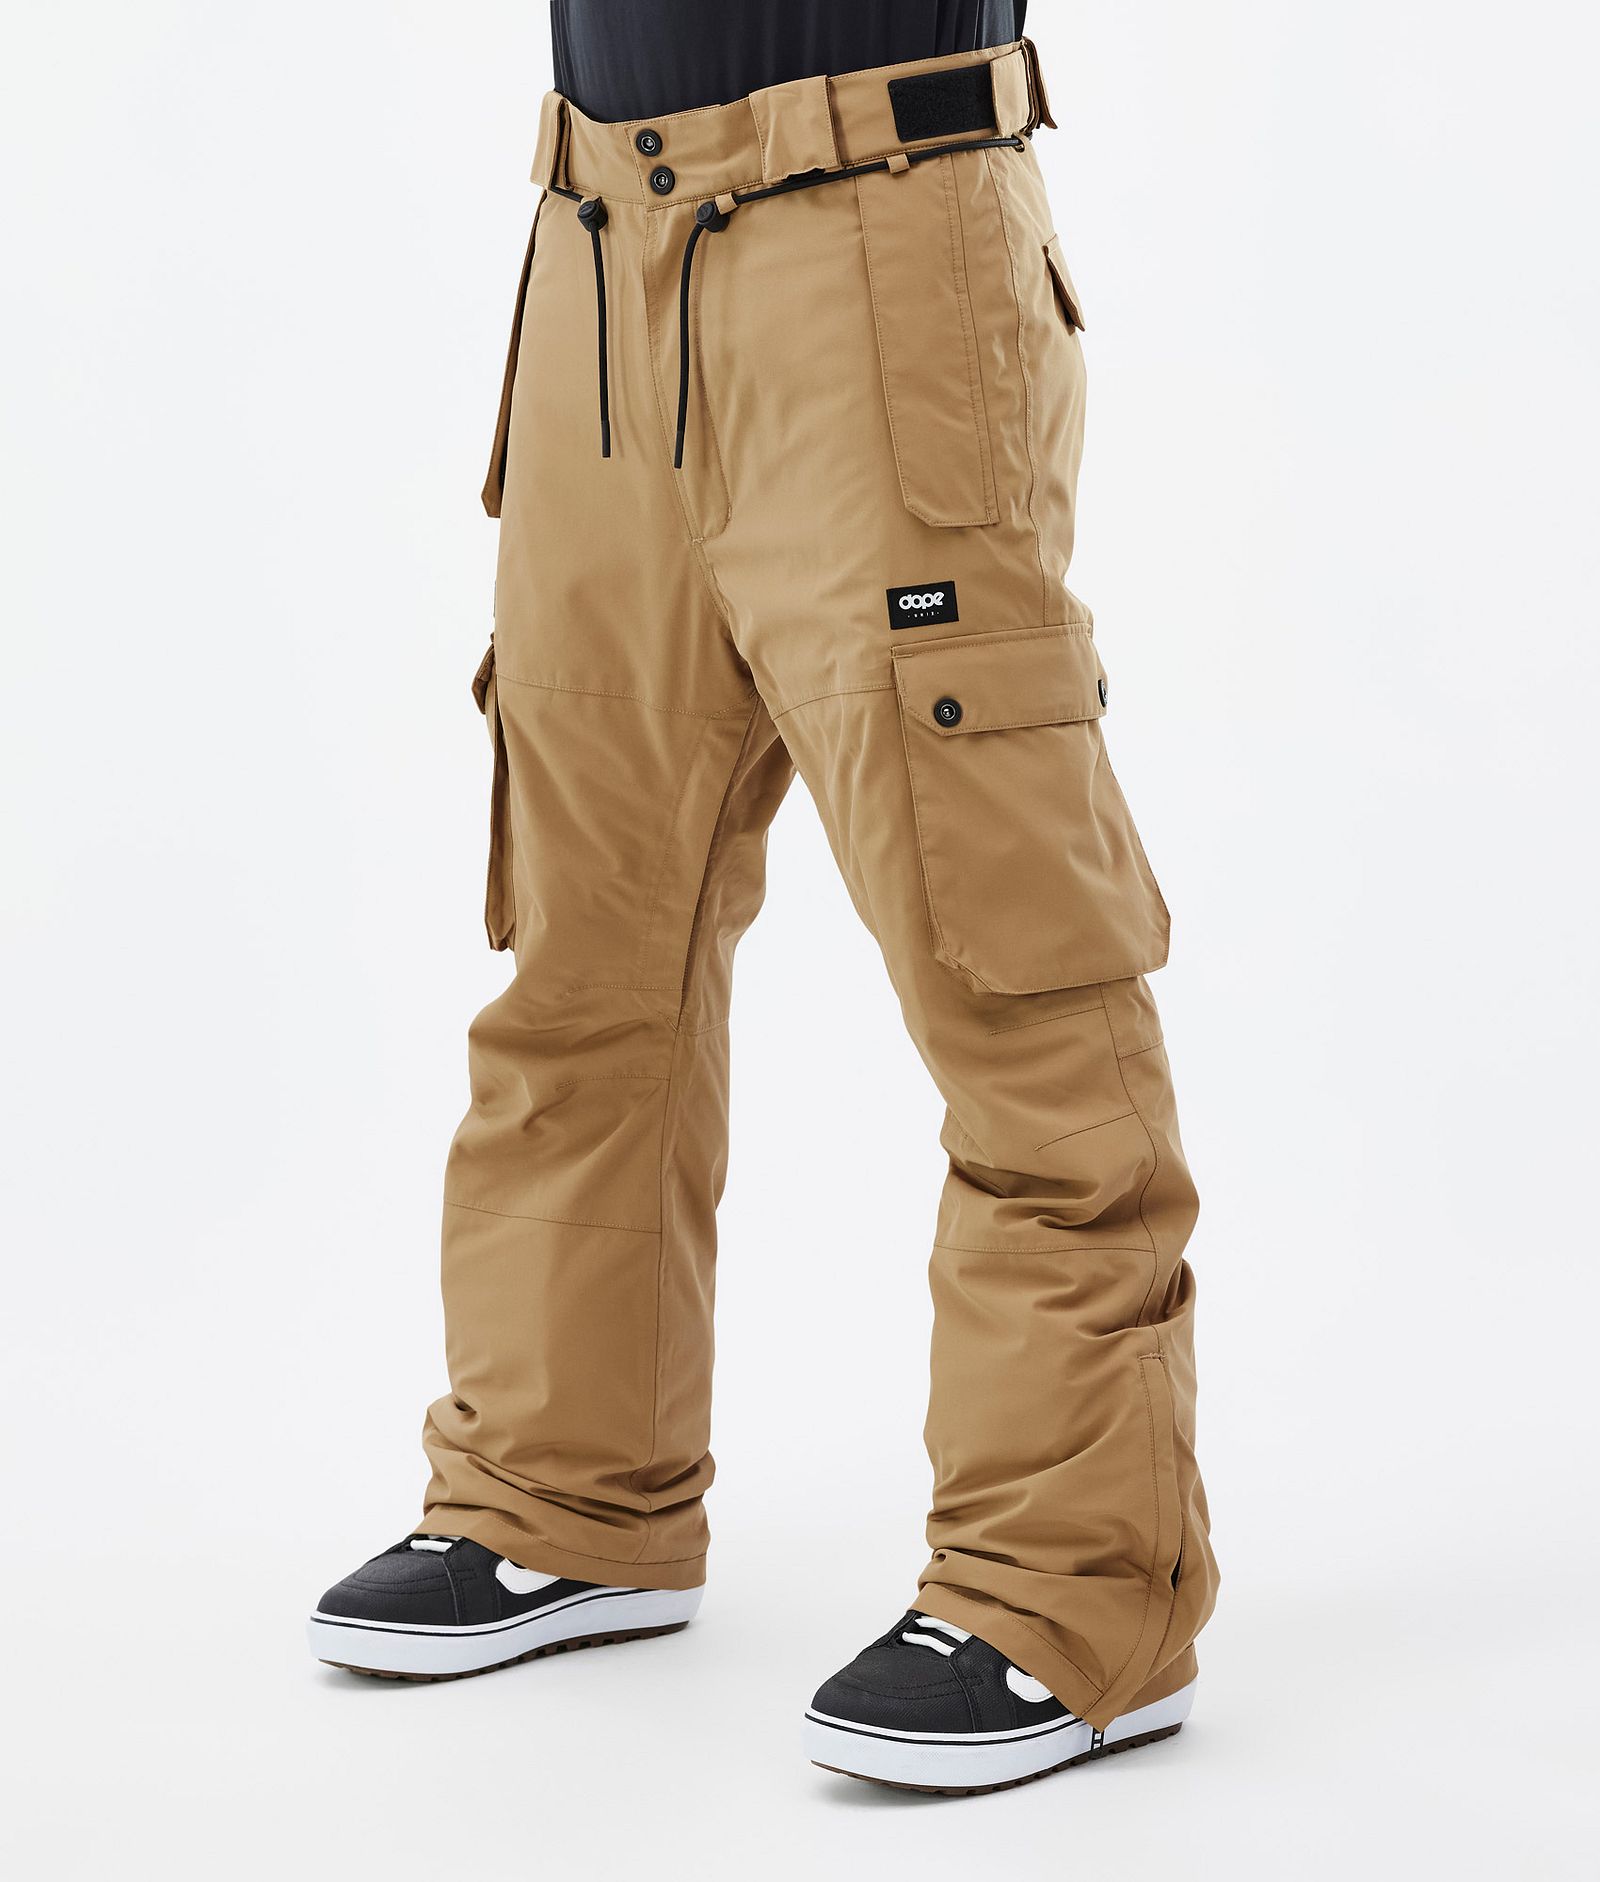 Dope Iconic Pantalones Snowboard Hombre Gold - Dorado